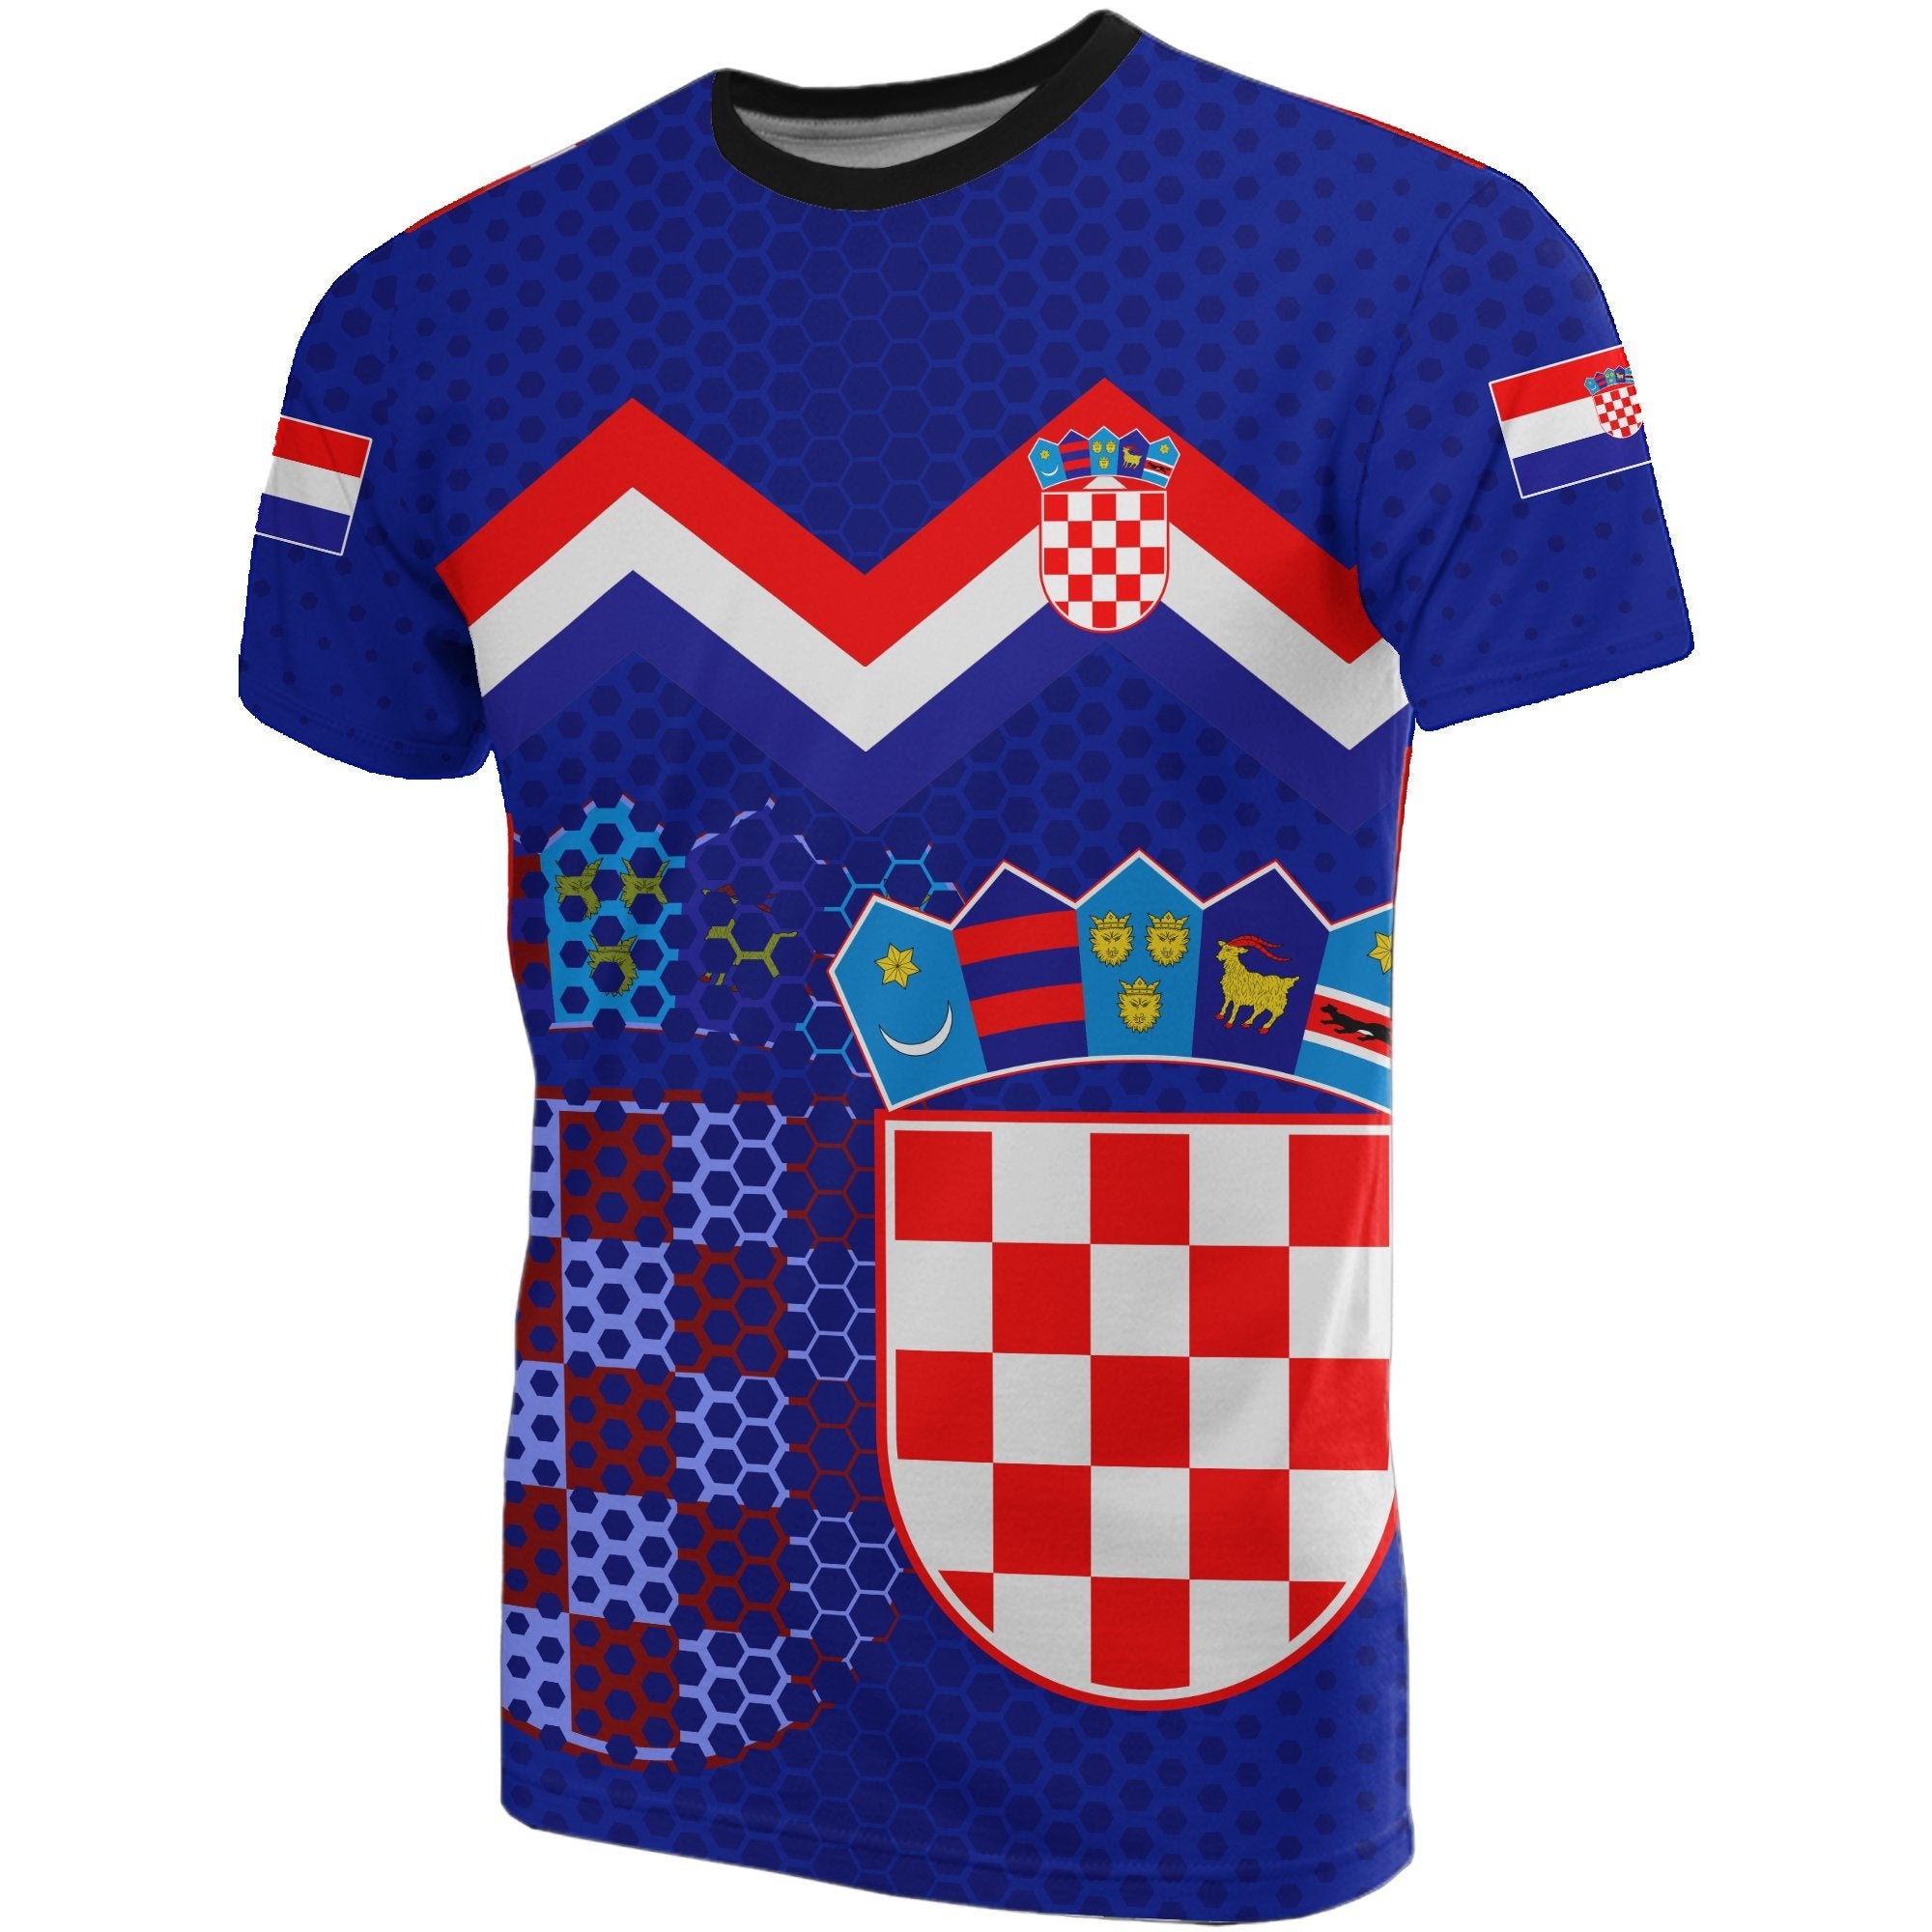 hrvatska-croatia-coat-of-arms-t-shirt-blue-1st